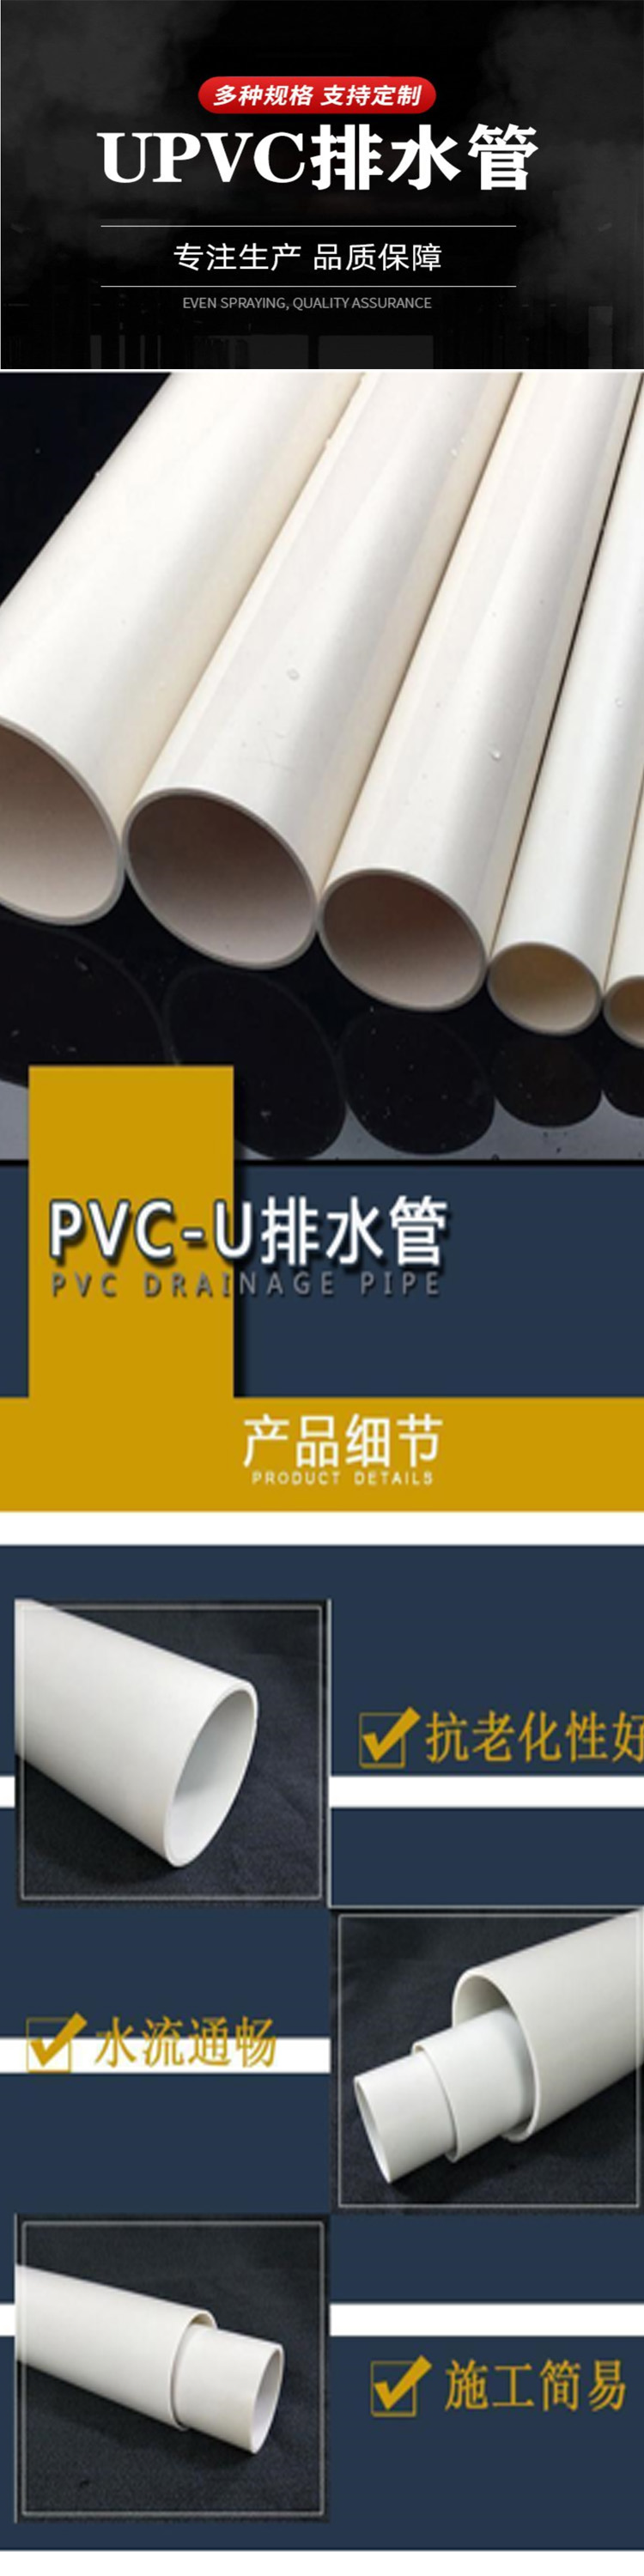 UPVC drainage pipe, PVC U purpose, sewage pipe, PVC rainwater pipe